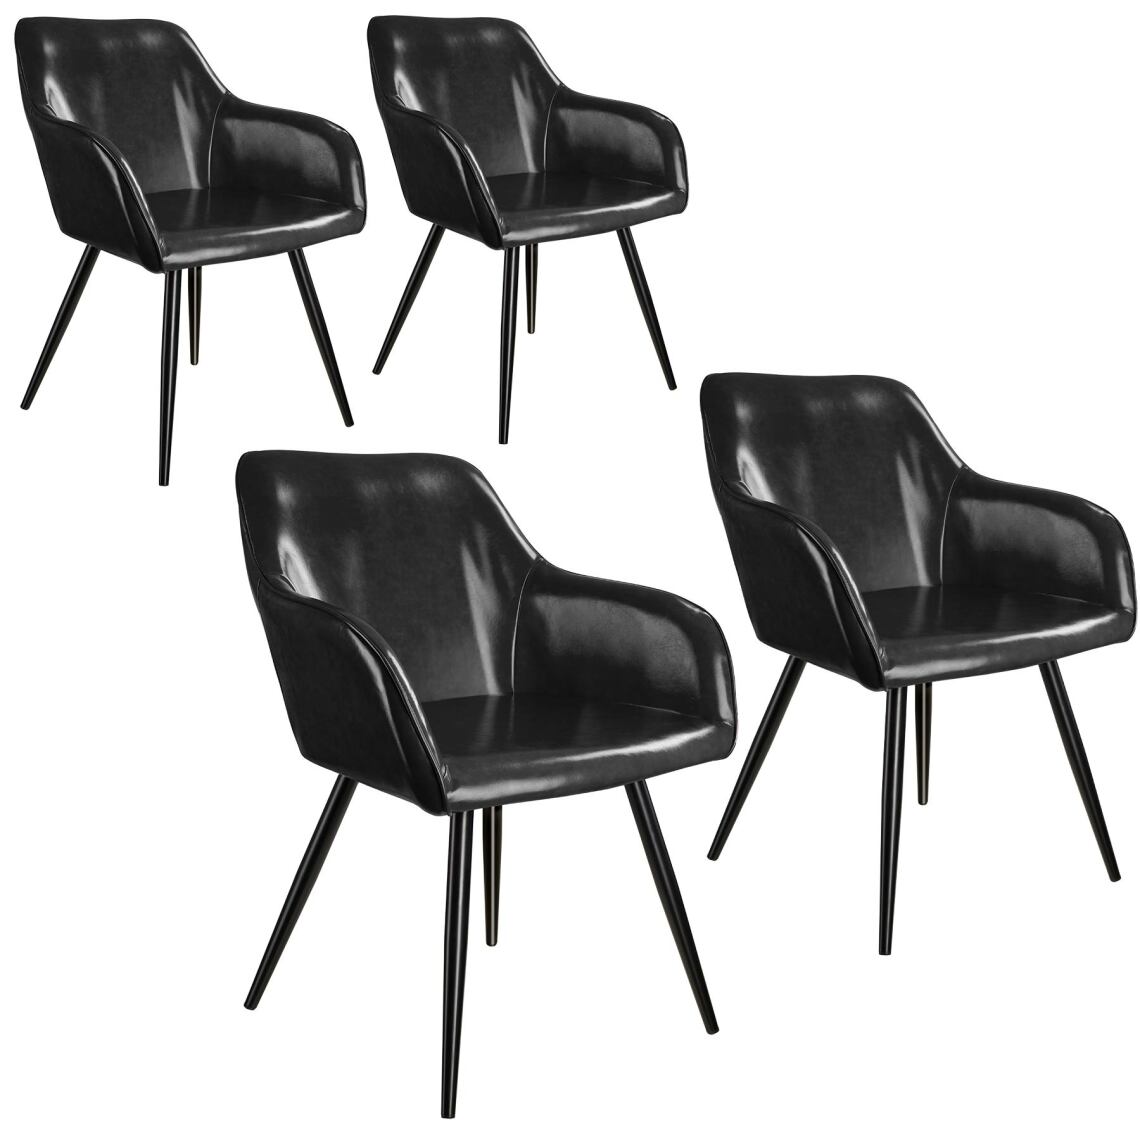 Tectake - 4 Chaises Marilyn en cuir synthétique - noir - Chaises